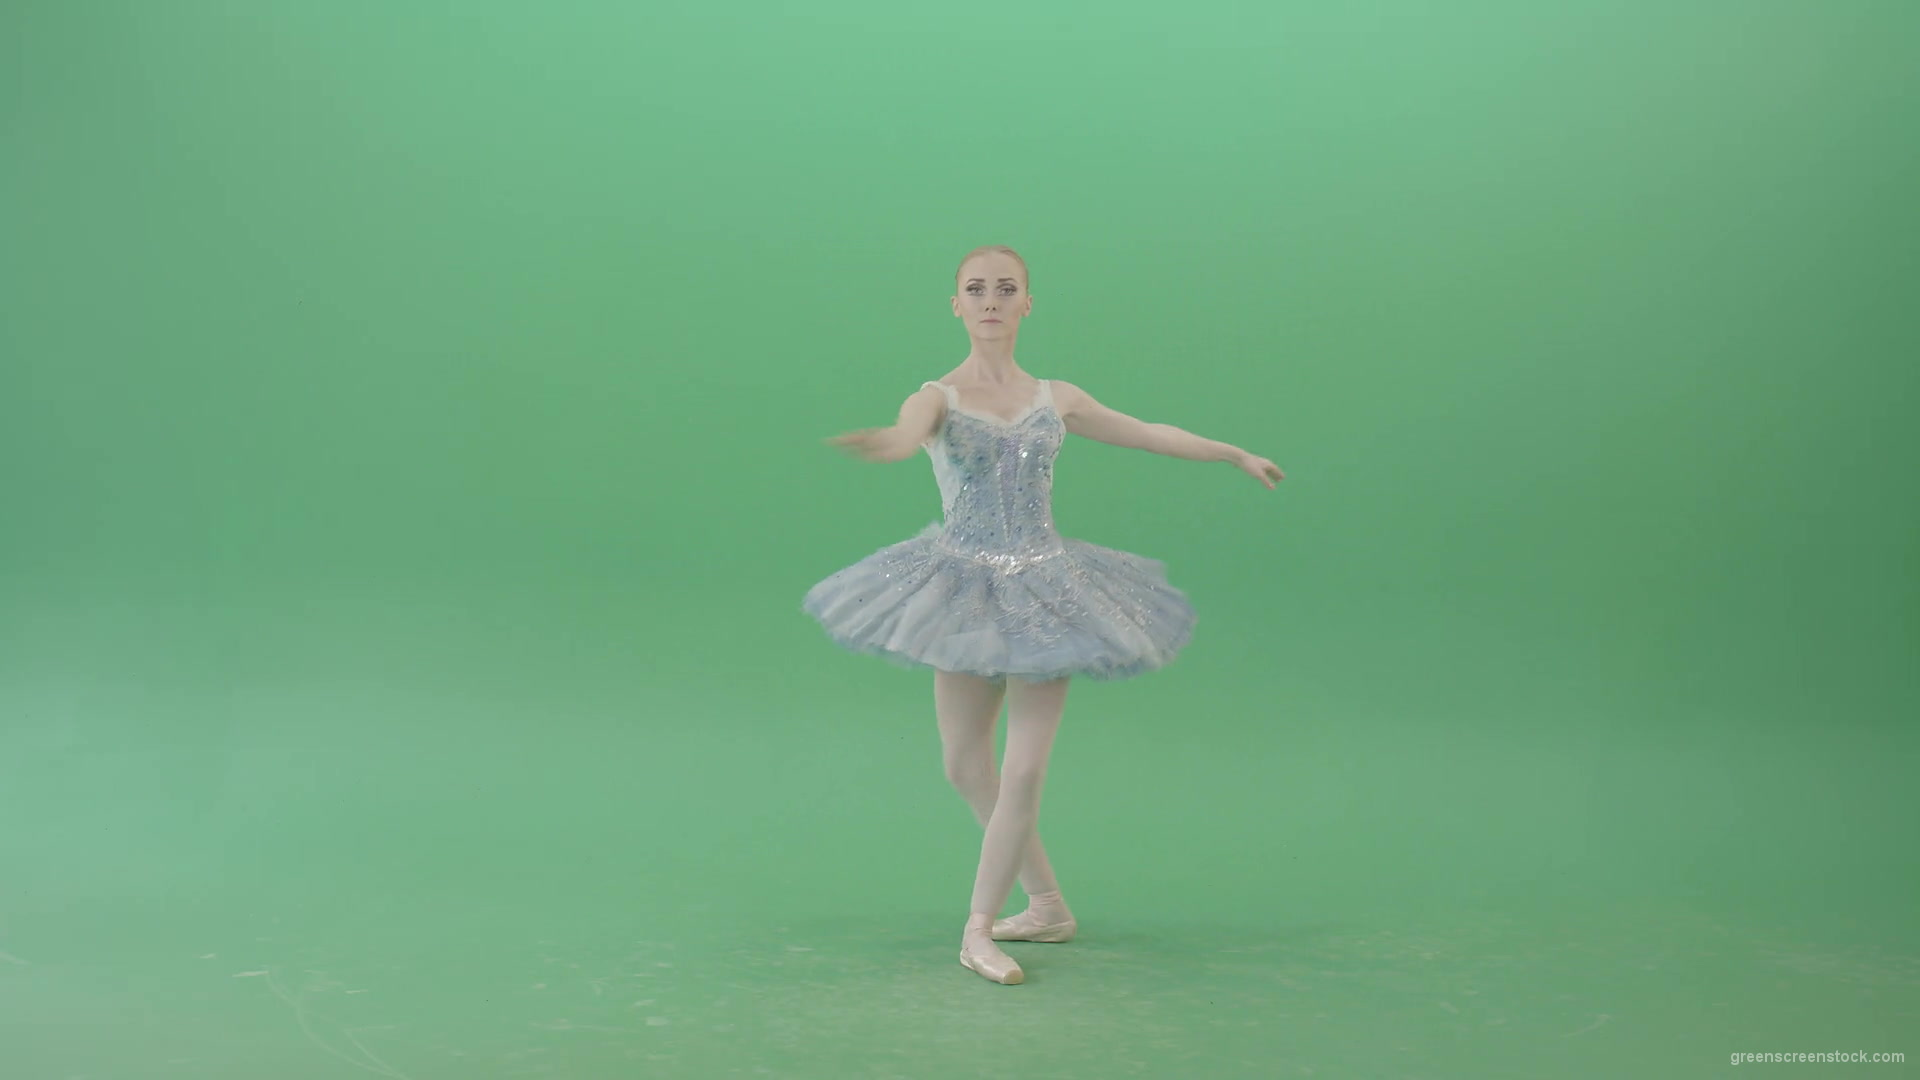 Beauty-blonde-ballerin-ballet-dancing-girl-in-blue-dress-spinning-over-green-screen-4K-Video-Footag-30fps-1920_005 Green Screen Stock